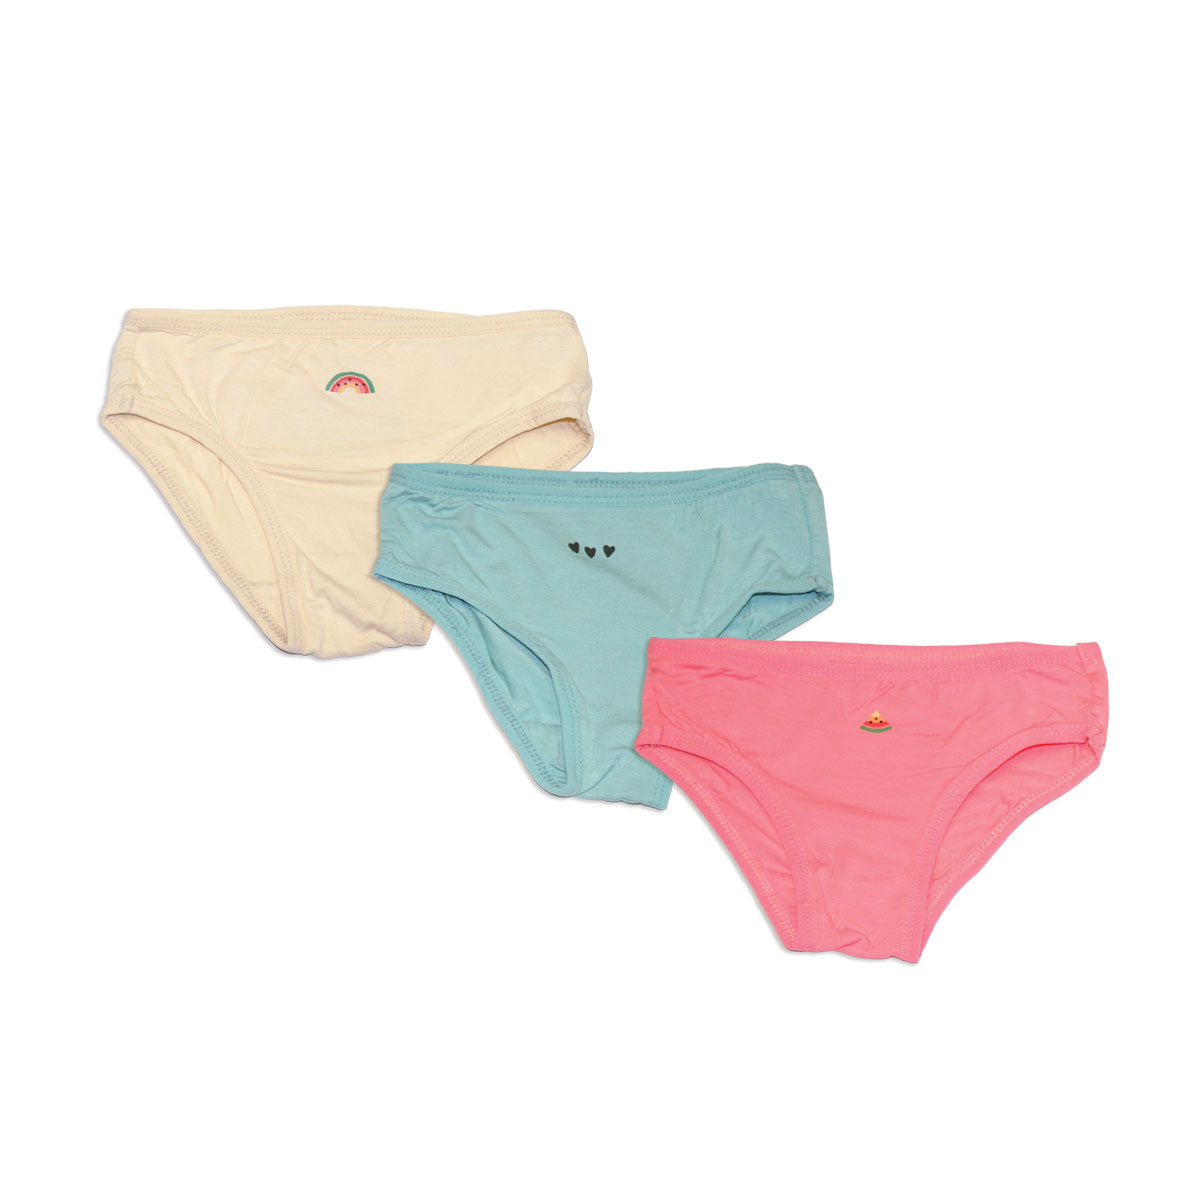 Bamboo Girls Bikini Underwear 3 pack (Pink Lemonade/Lustre/Soft Sand) 